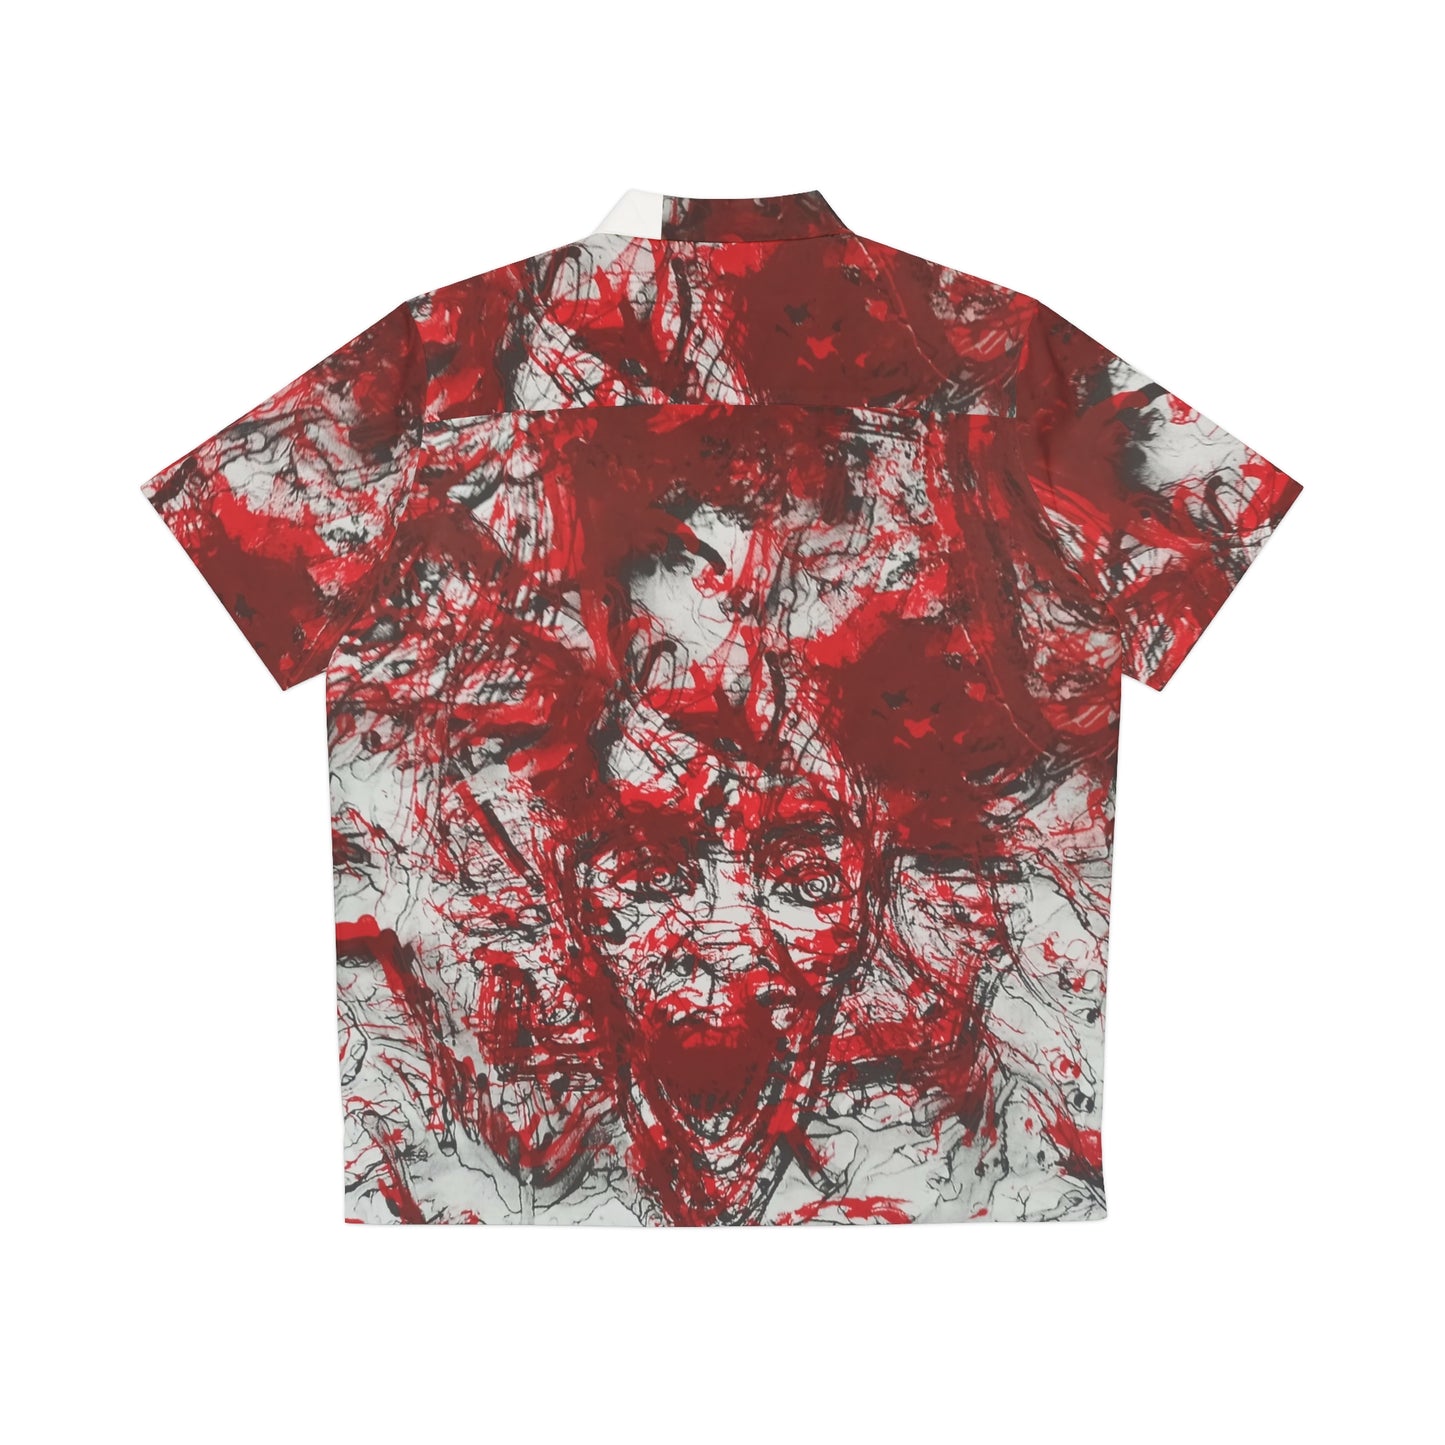 "The Scream" Hawaiian Shirt